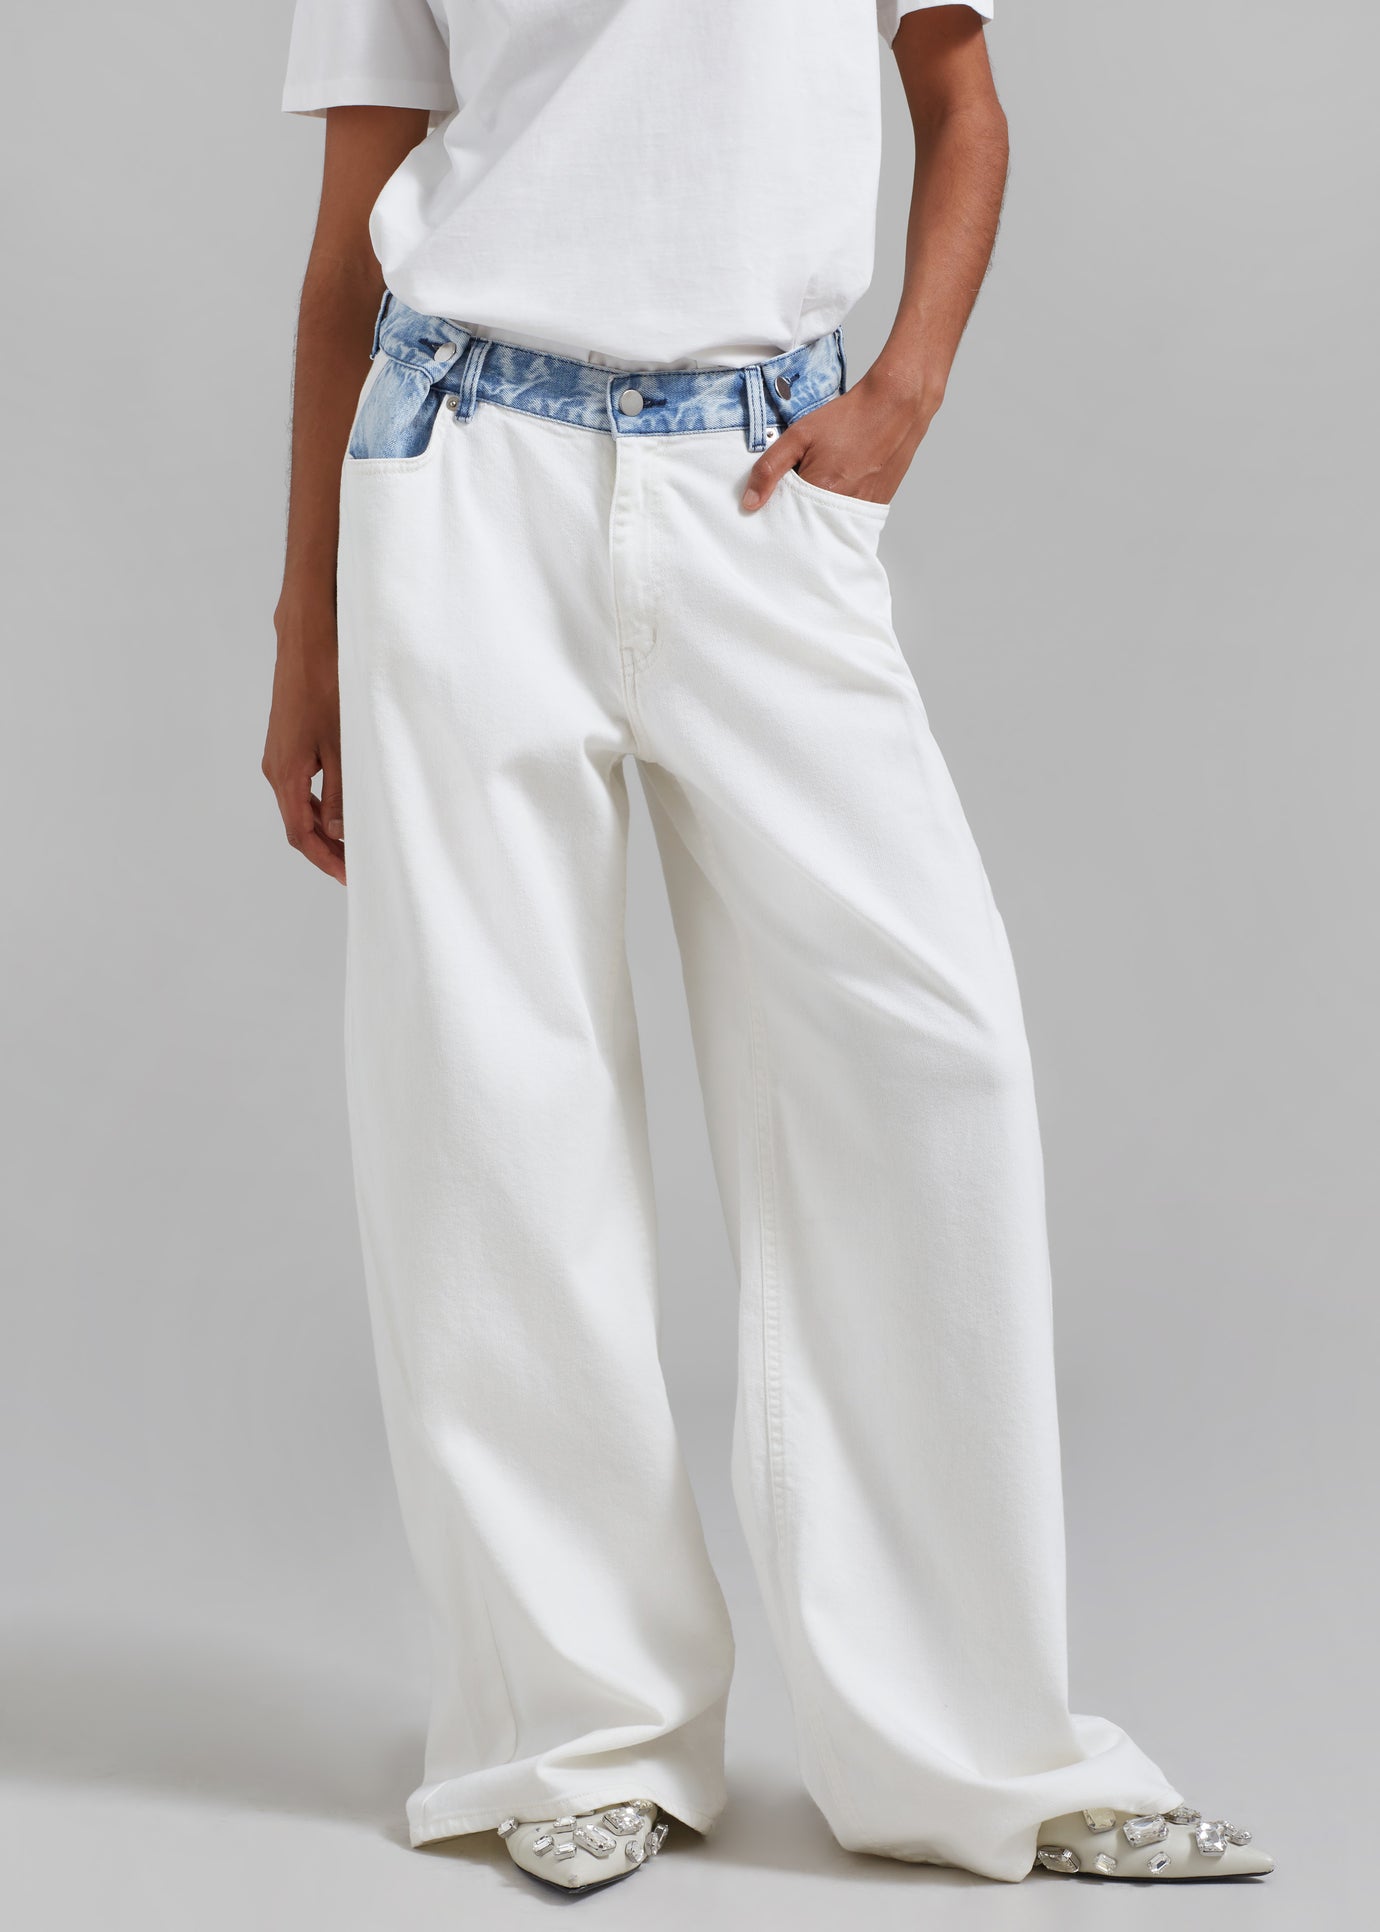 Hayla Contrast Denim Pants - Off White/Blue - 1